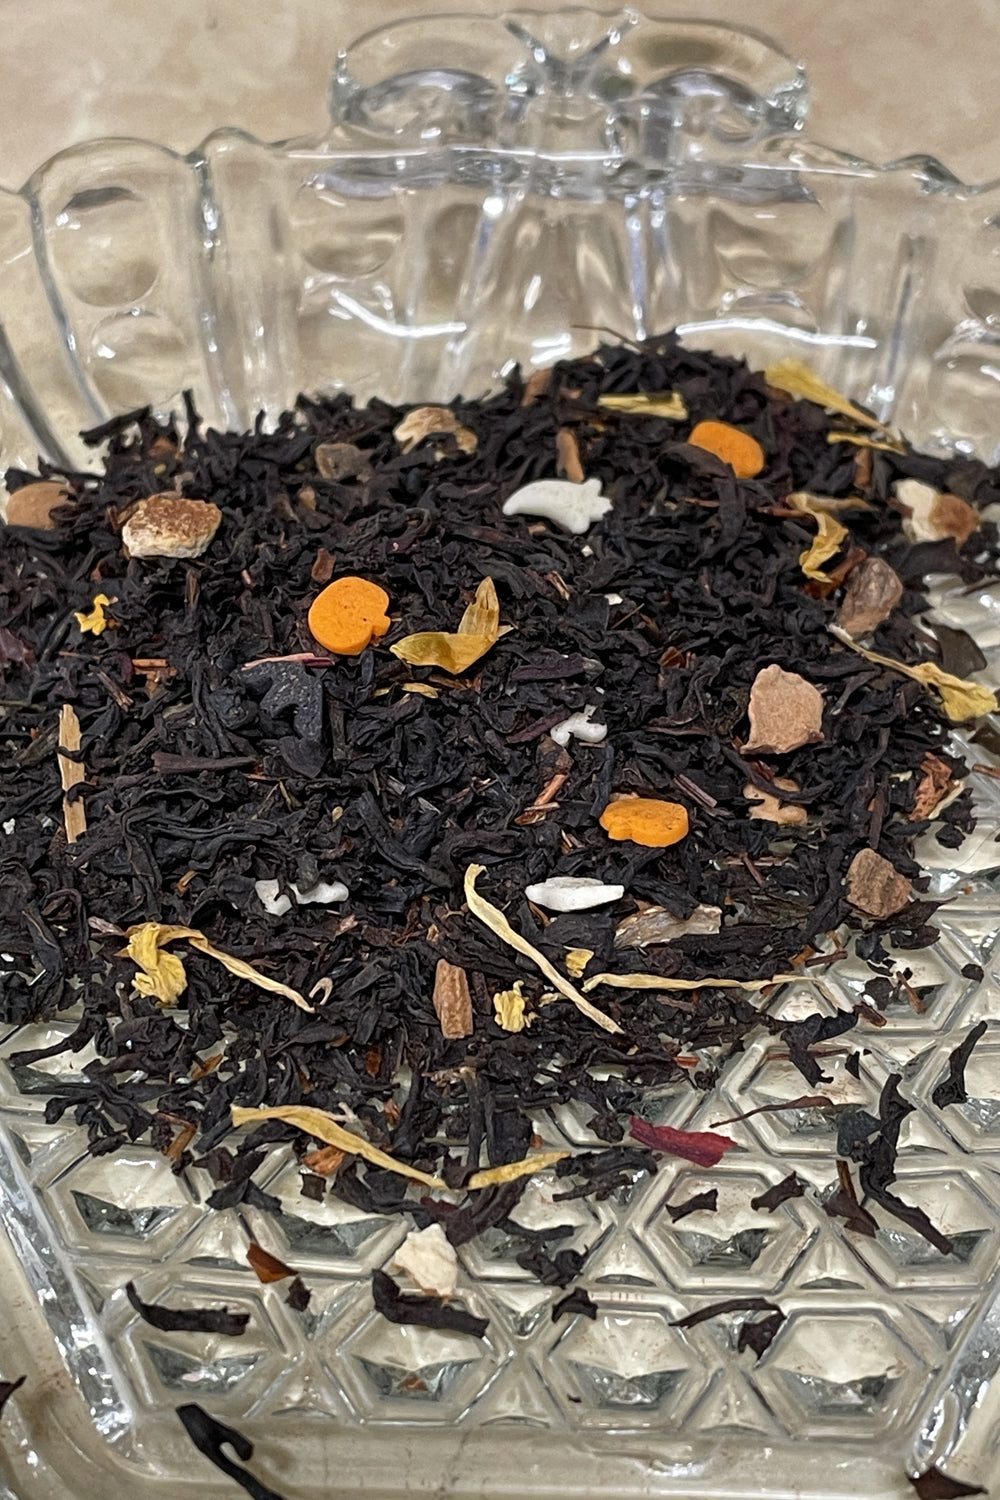 Rocky Horror Spice Black Tea | Halloween Tea | Pumpkin Spice Tea | Fall Flavored Tea | Halloween Tea | Dessert Tea